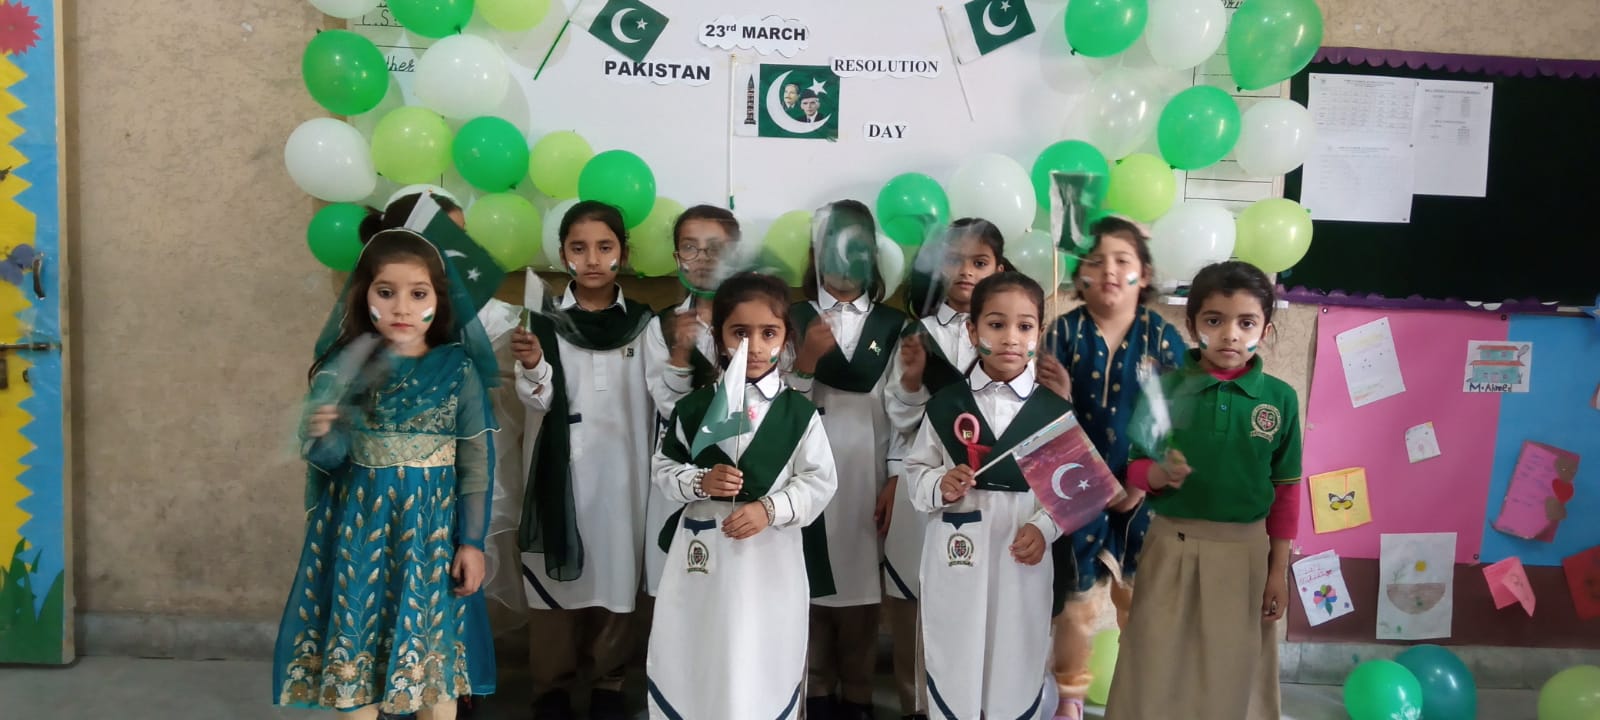 Pakistan Day Celebrations at Forces School System Khatam e Nabuwwat Campus